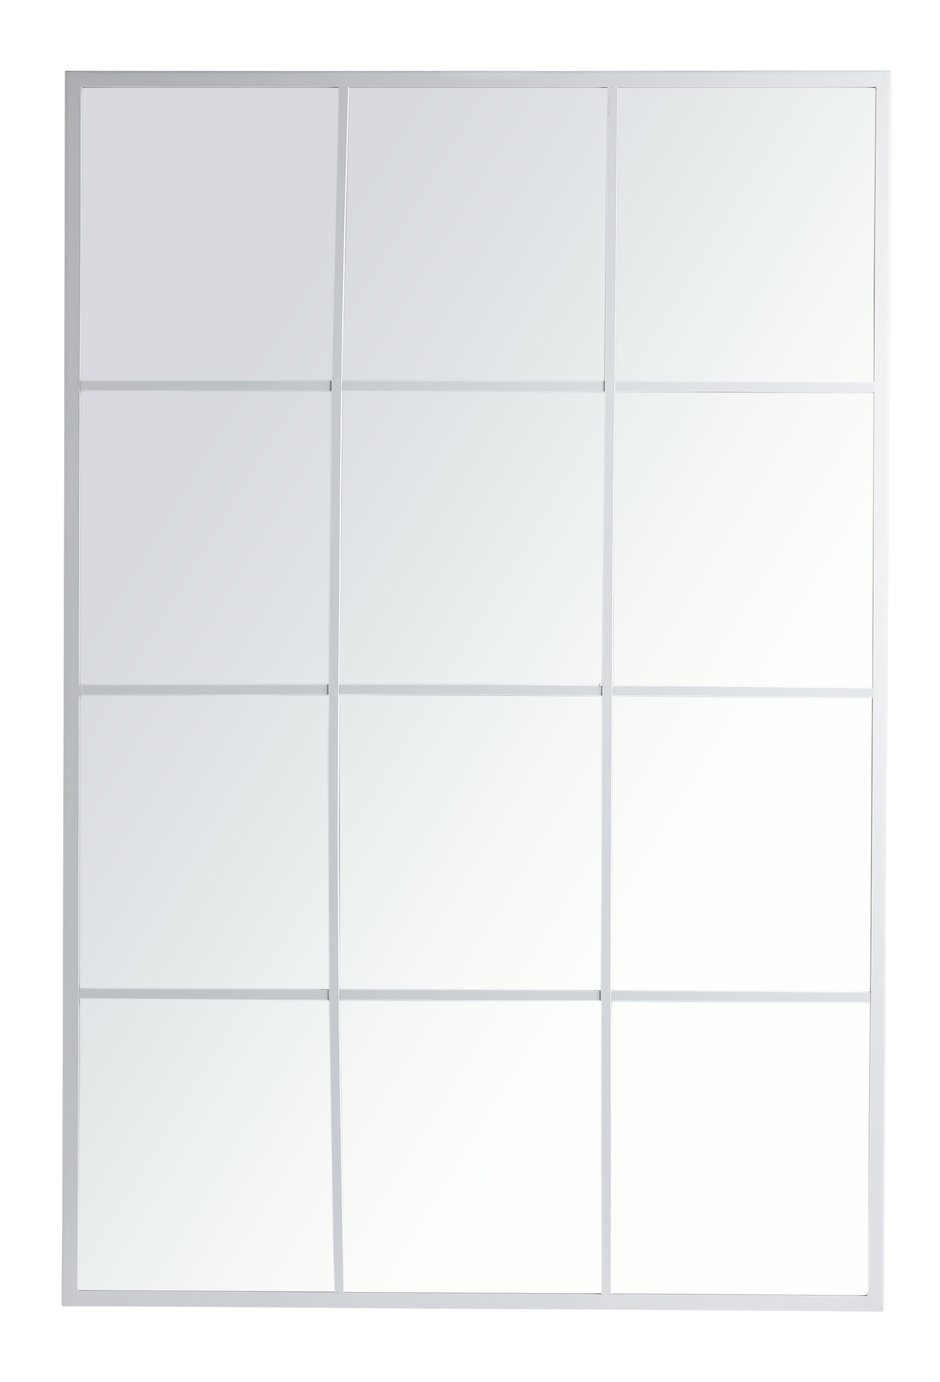 Habitat Rectangular Window Mirror - Grey - 120x80cm